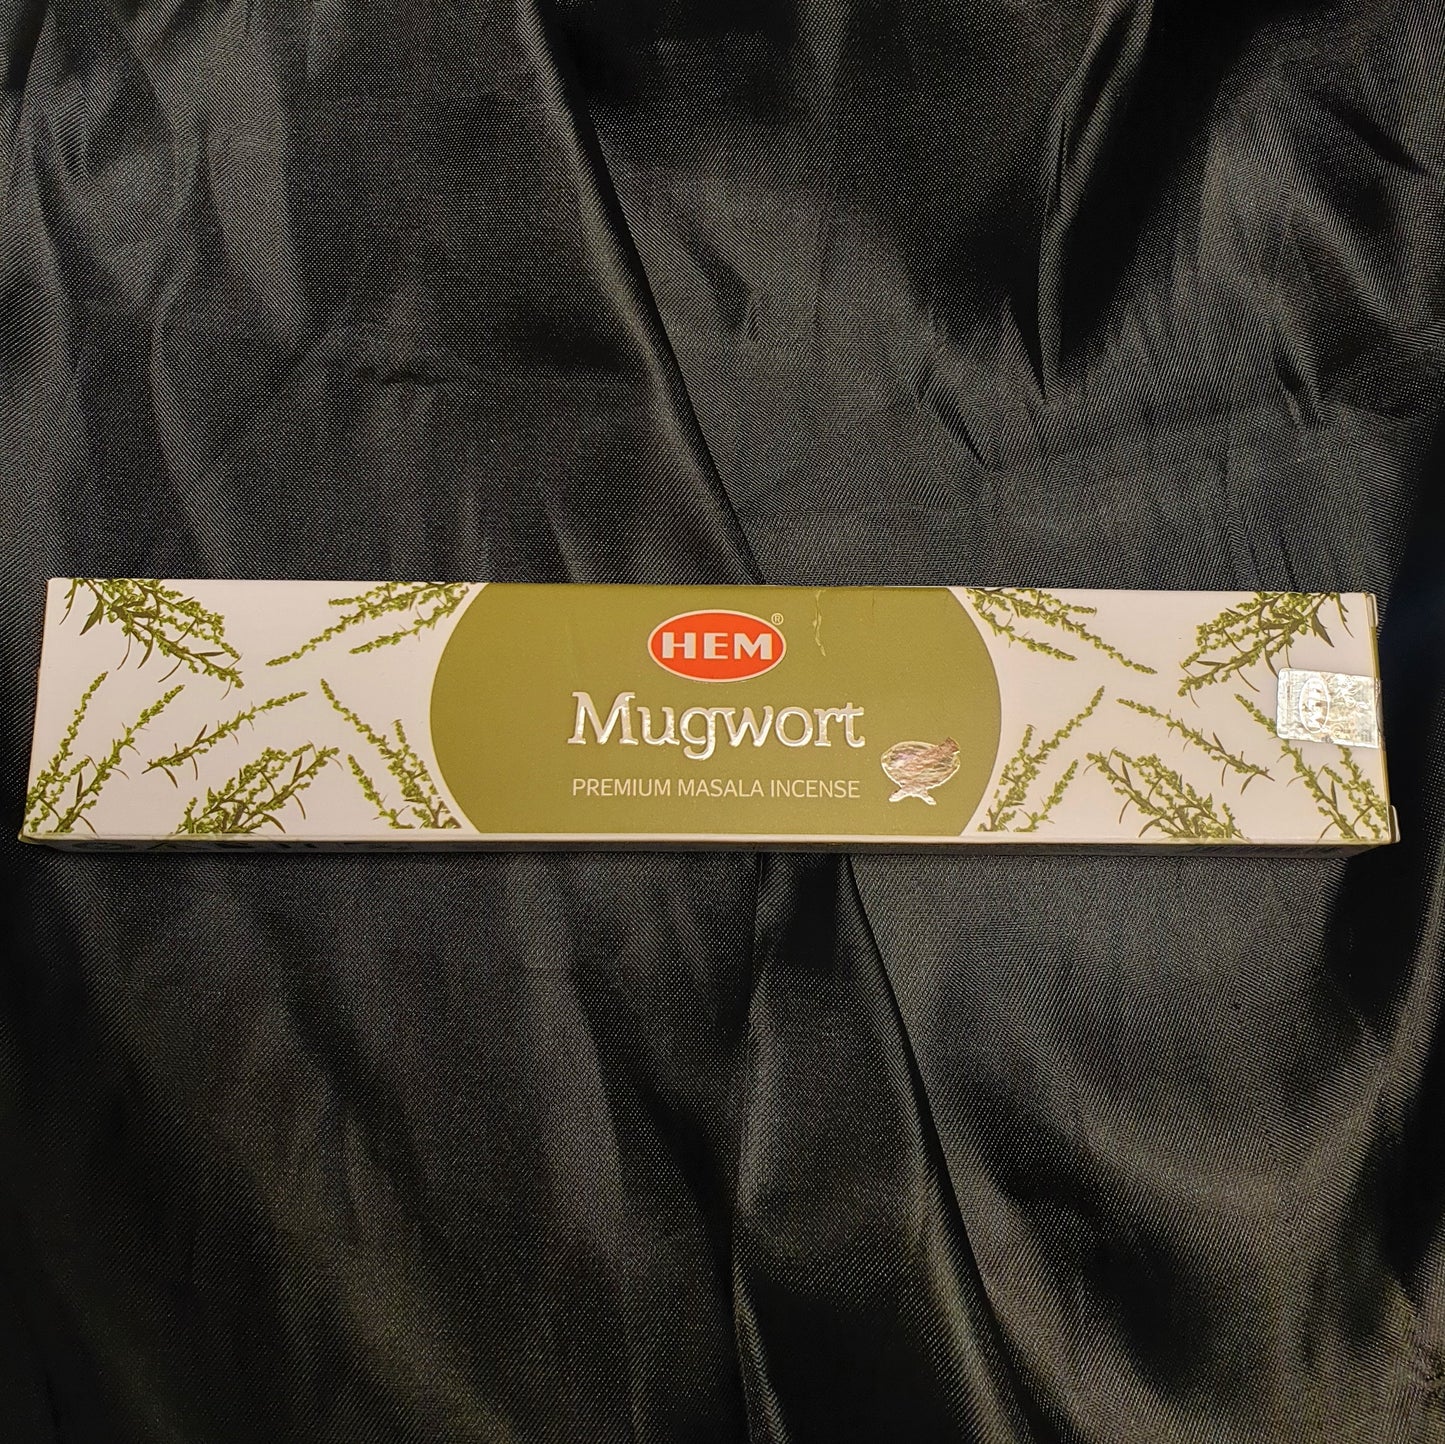 HEM Mugwort Premium Incense